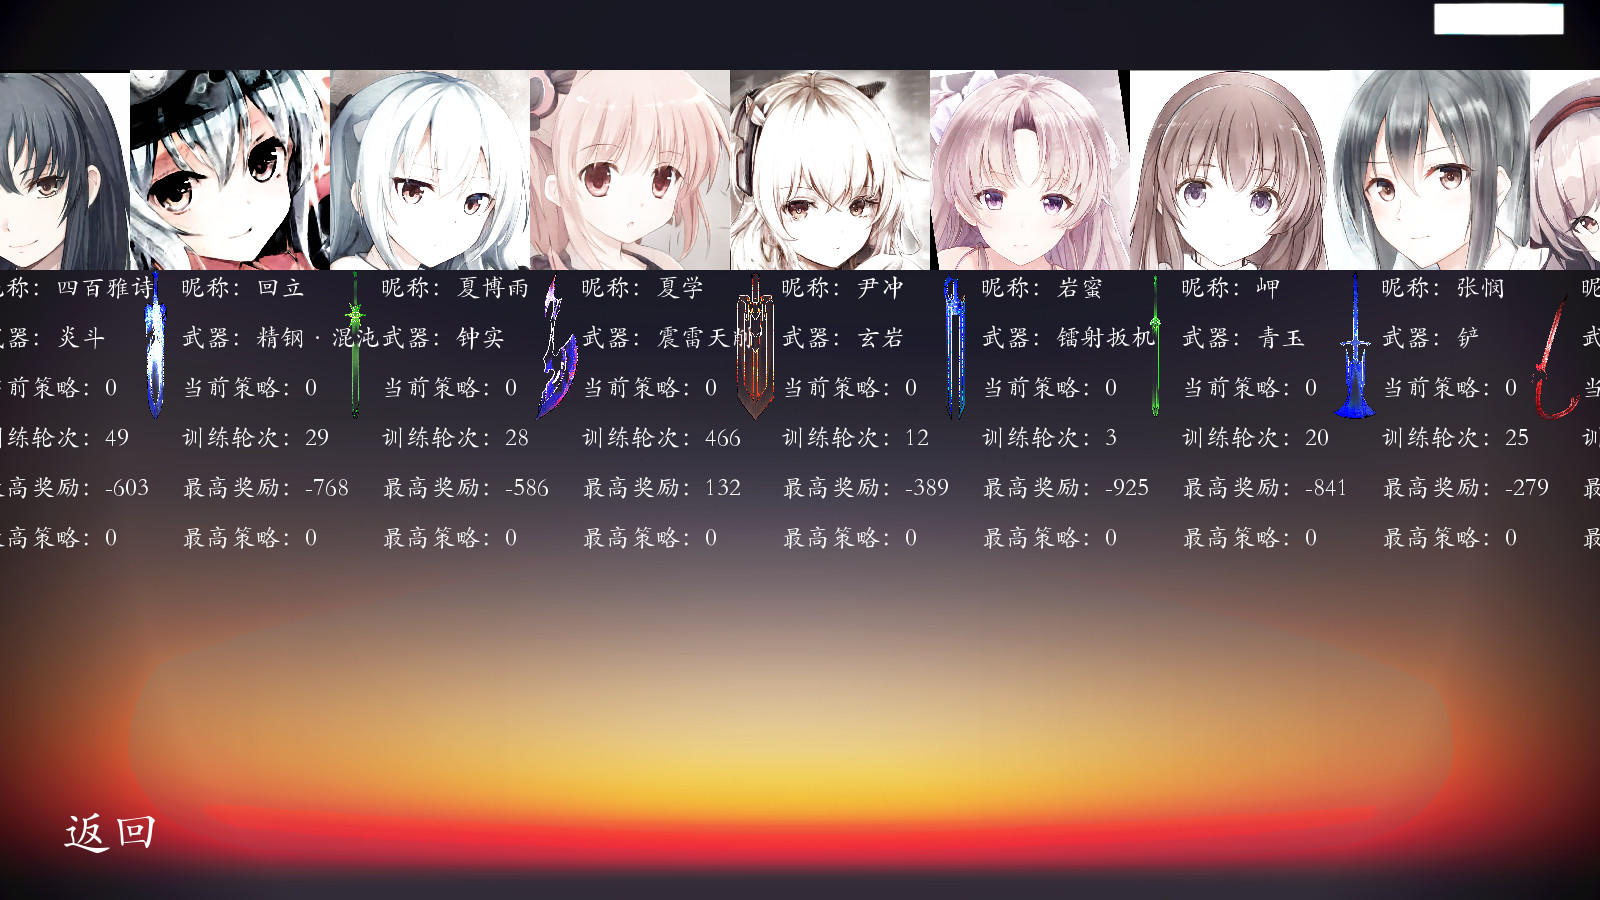 Screenshot 1 of AI alchemy journey starting from Jianniang 